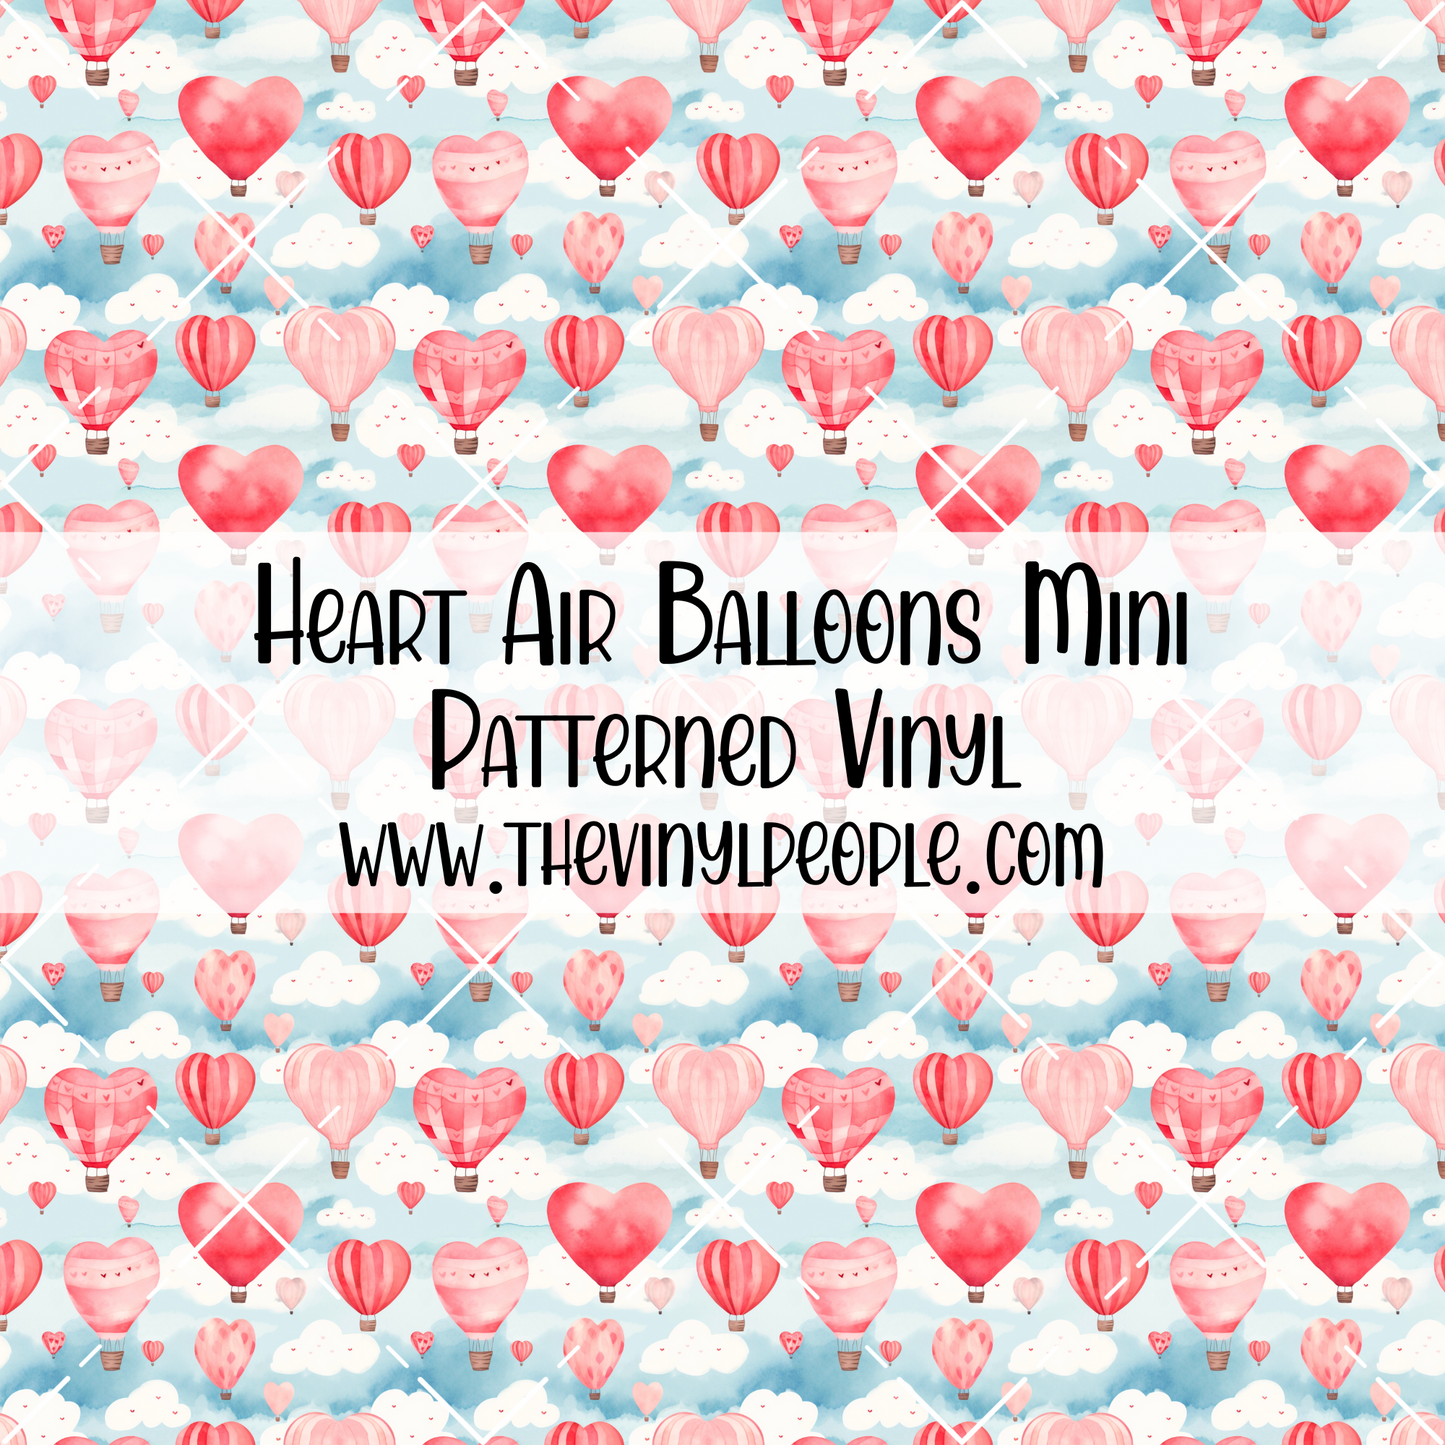 Heart Air Balloons Patterned Vinyl